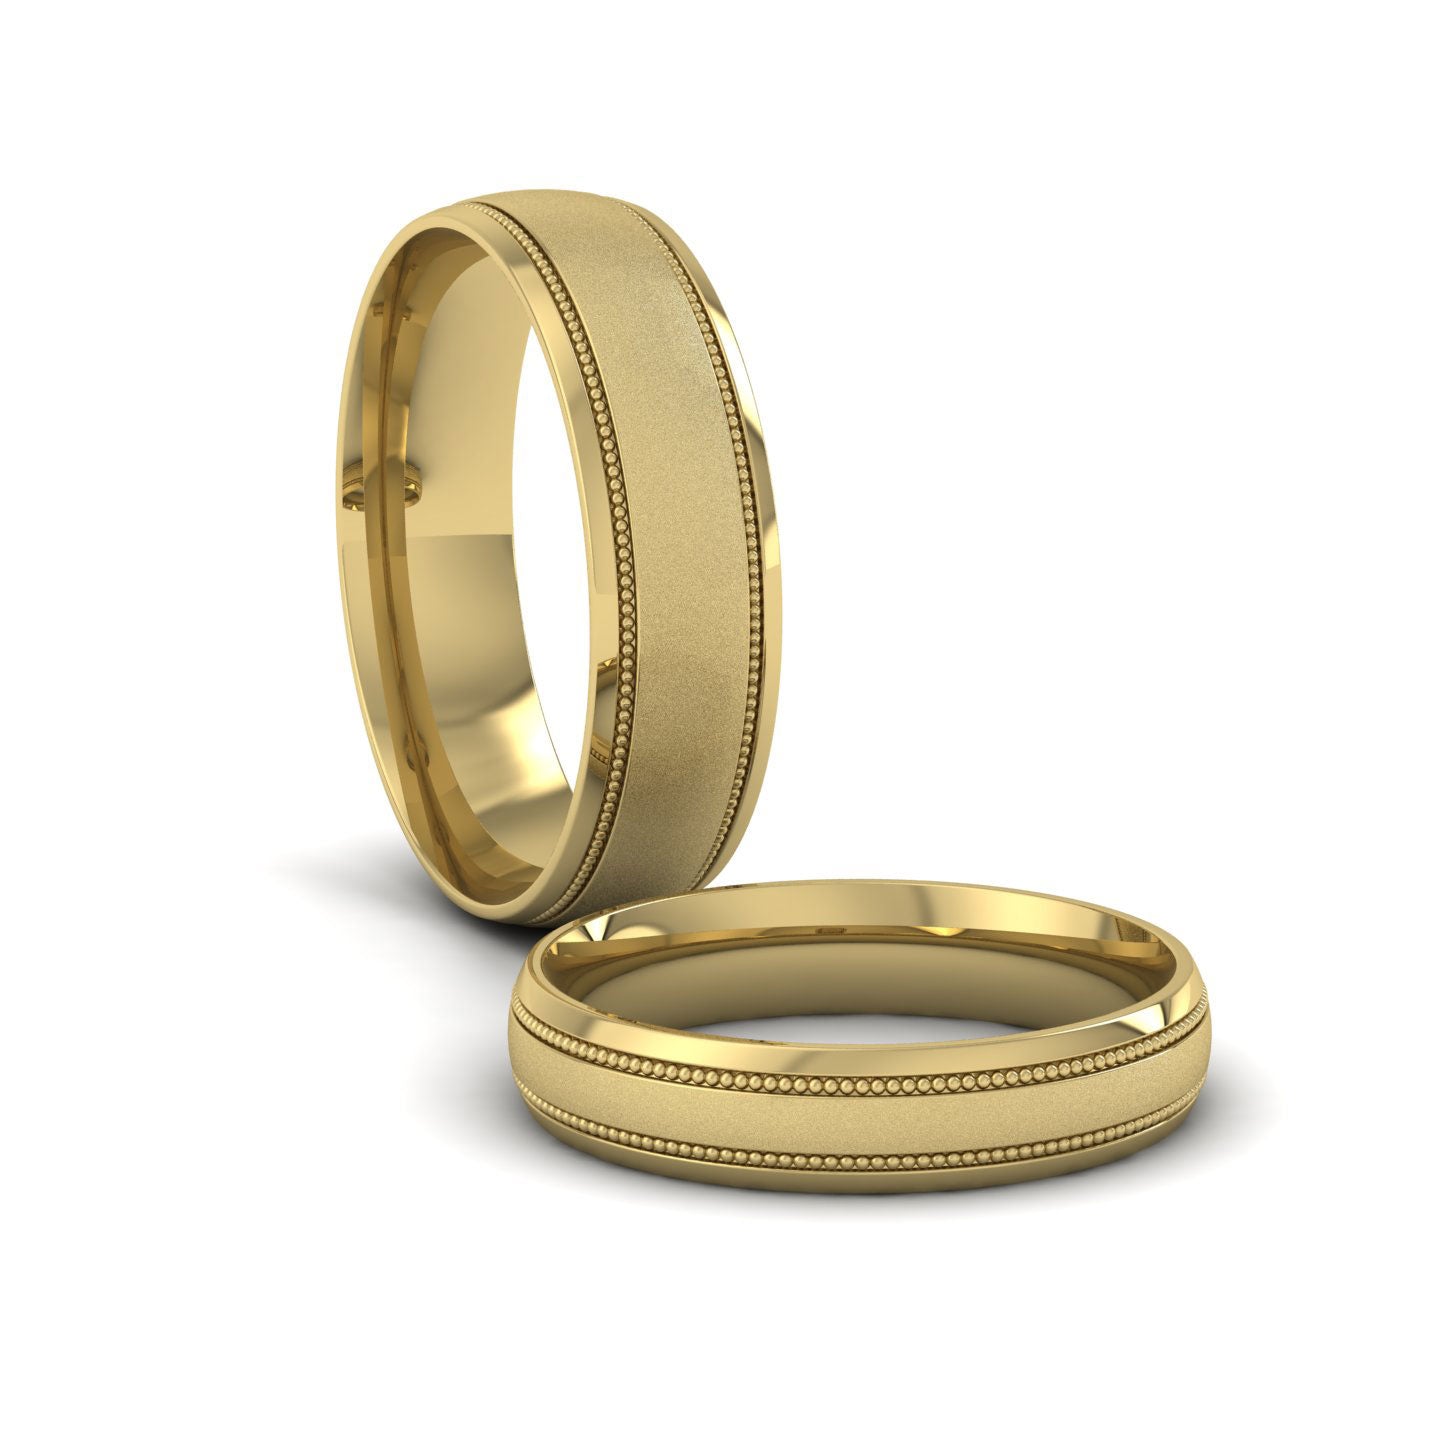 Millgrain And Contrasting Matt And Shiny Finish 22ct Yellow Gold 4mm Wedding Ring